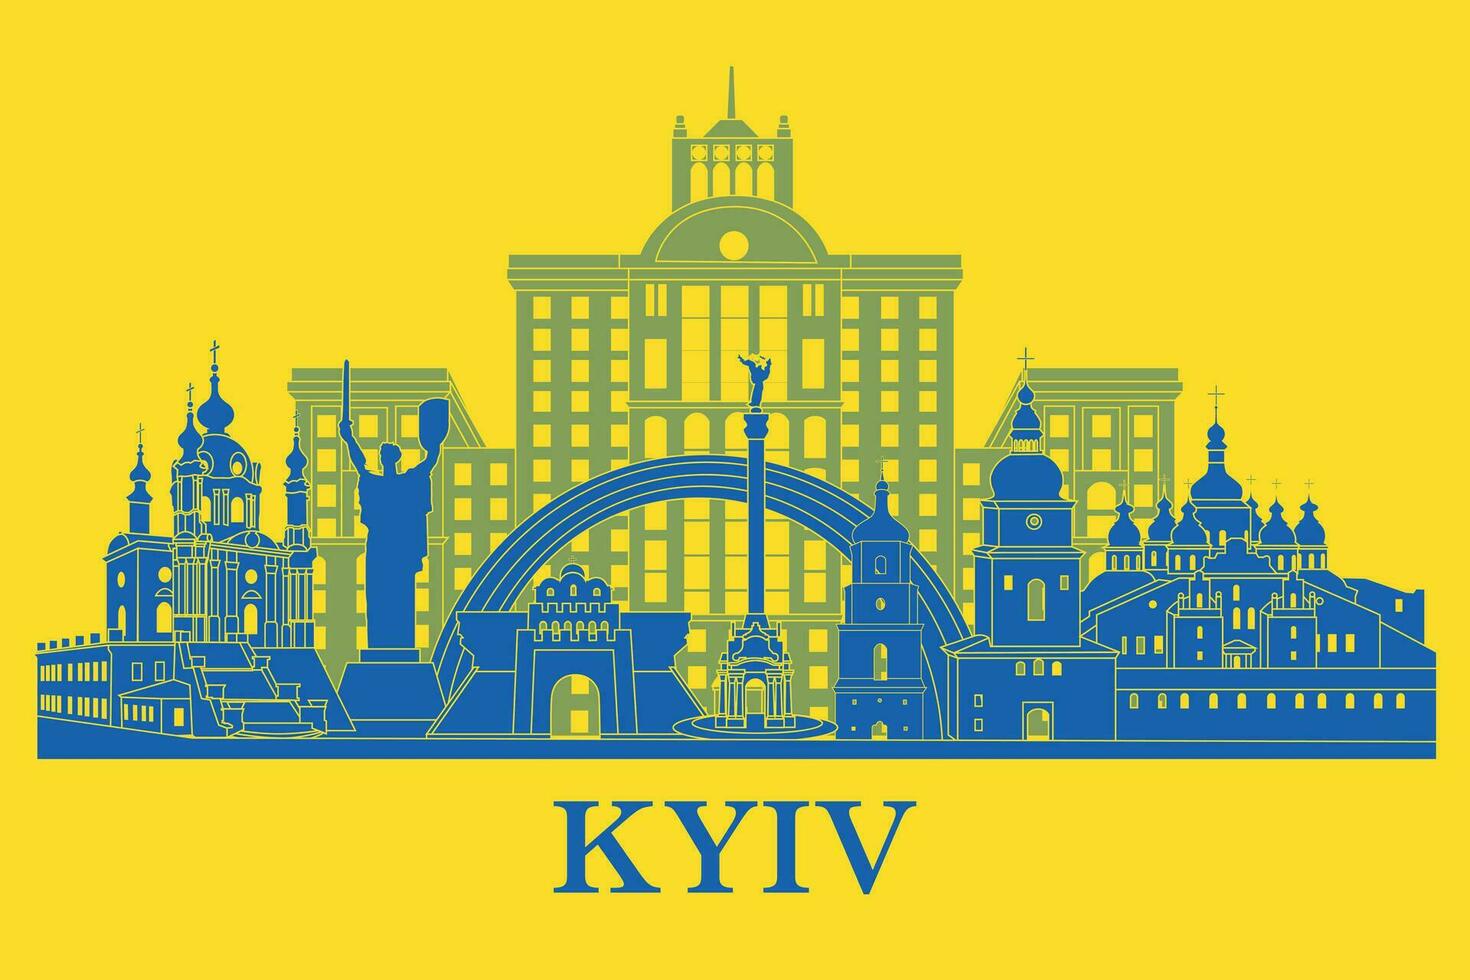 Kyiv city skyline, Ukraine. The most famous buildings in Kyiv, Ukraine vector